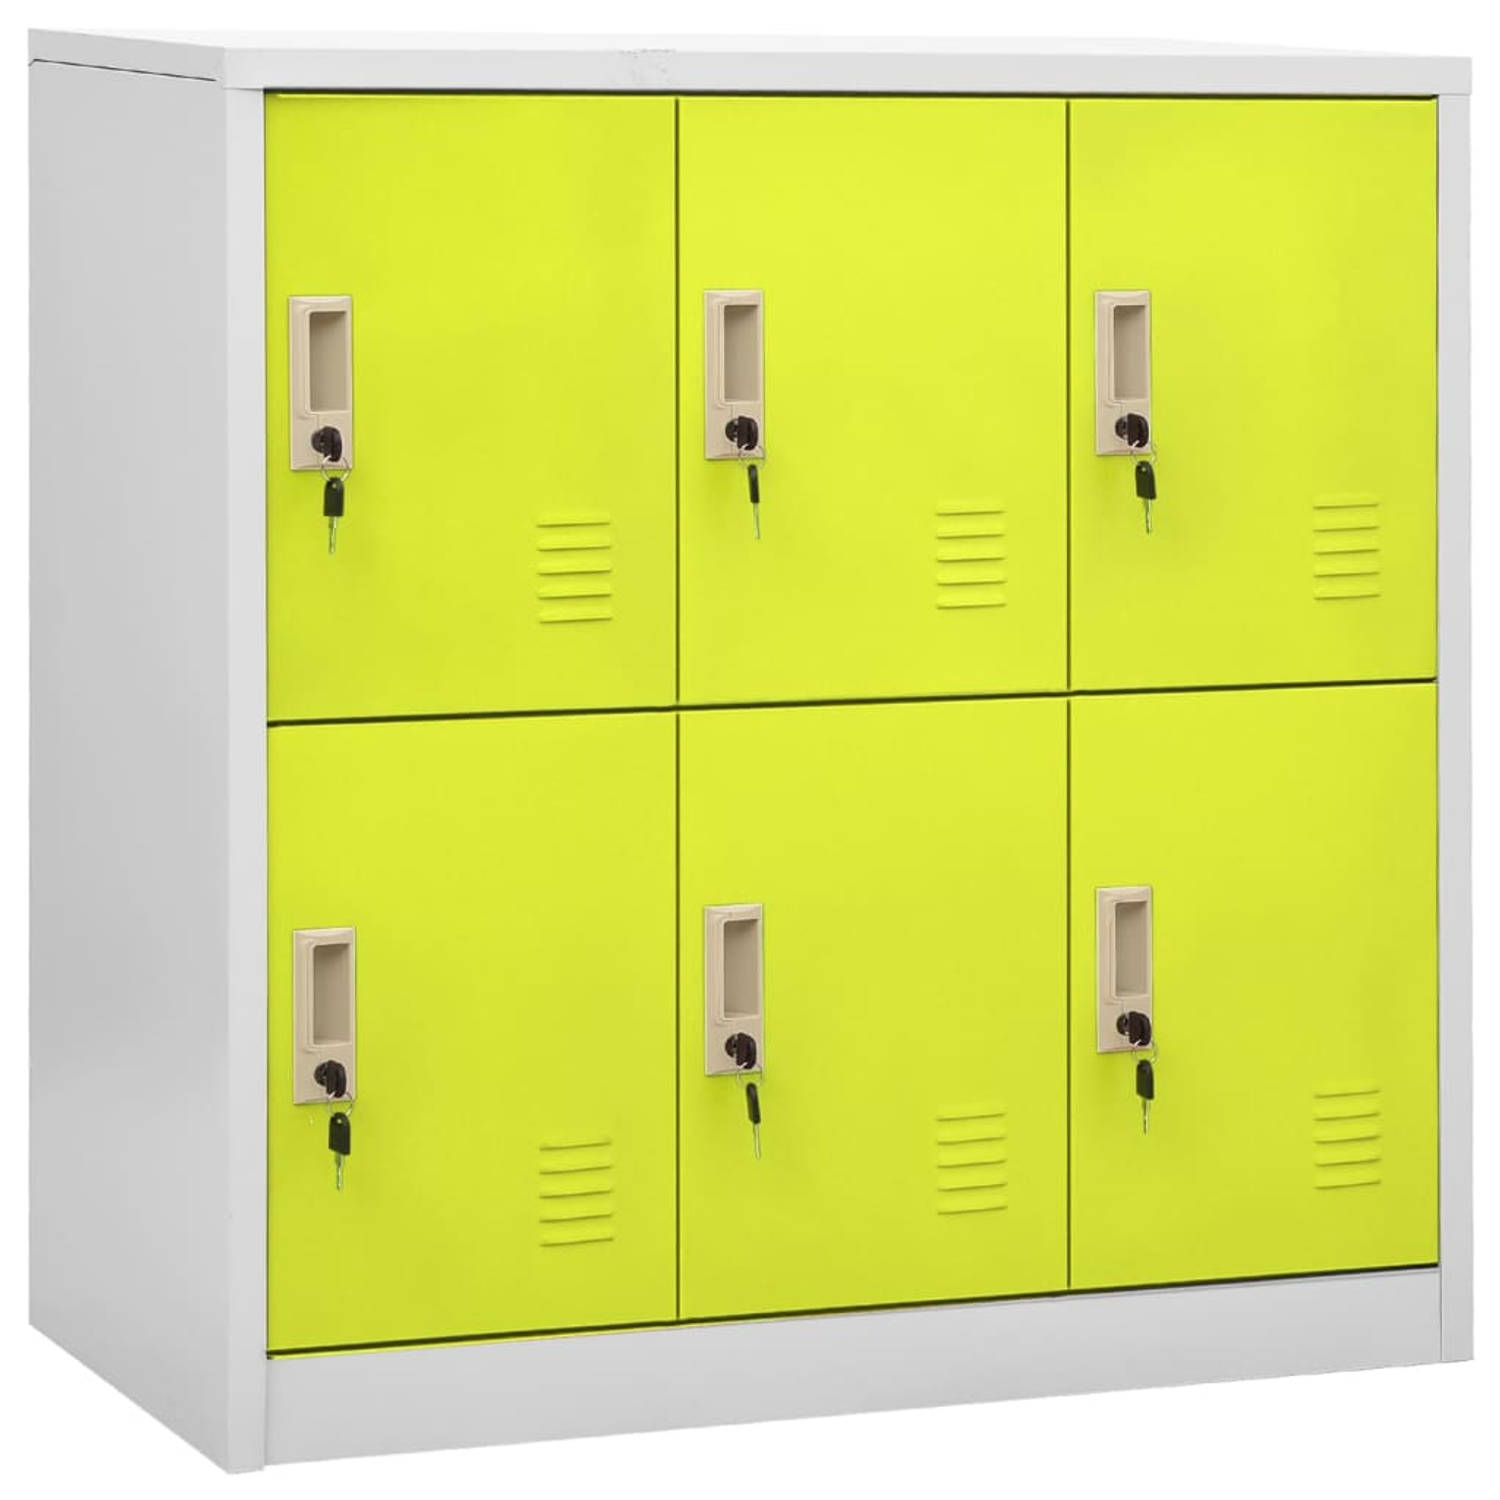 The Living Store Lockerkast - Staal - 90 x 45 x 92.5 cm - 6 lockers - Lichtgrijs en groen